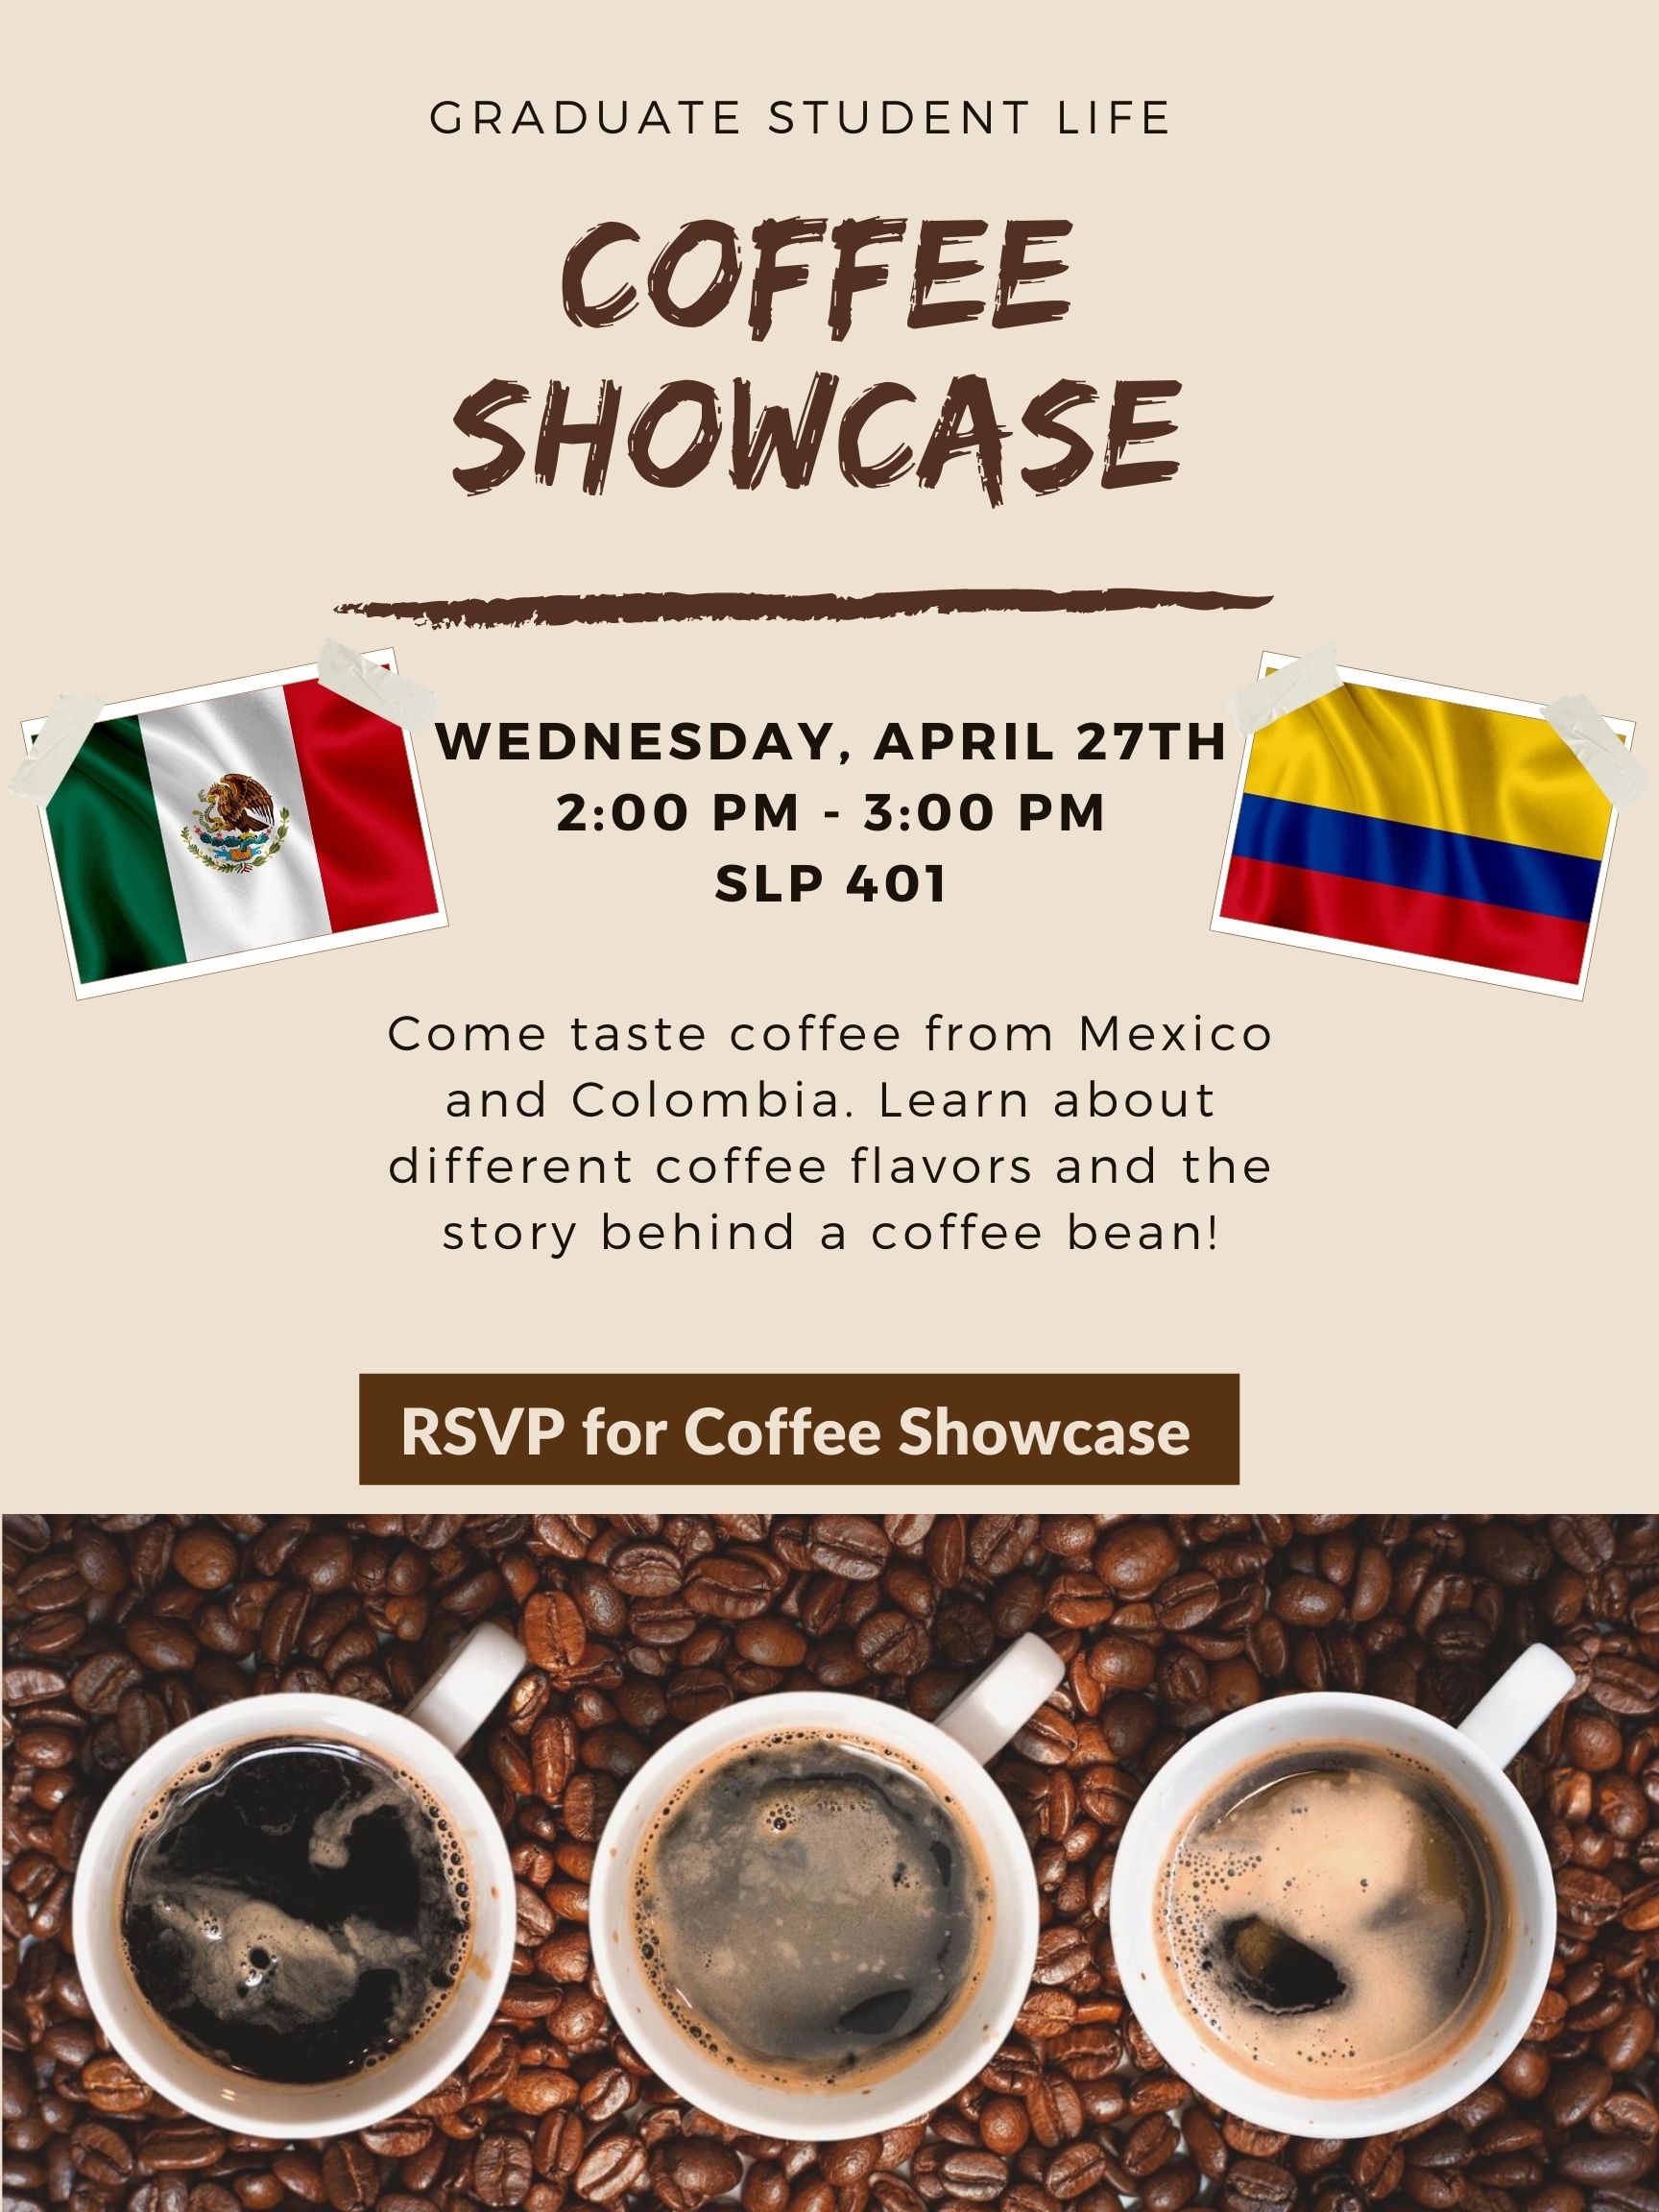 Coffee Showcase, April 27, 2pm, SLP 401, https://sandiego.secure.force.com/events#/esr?eid=a0K4y00000XtX2ZEAV